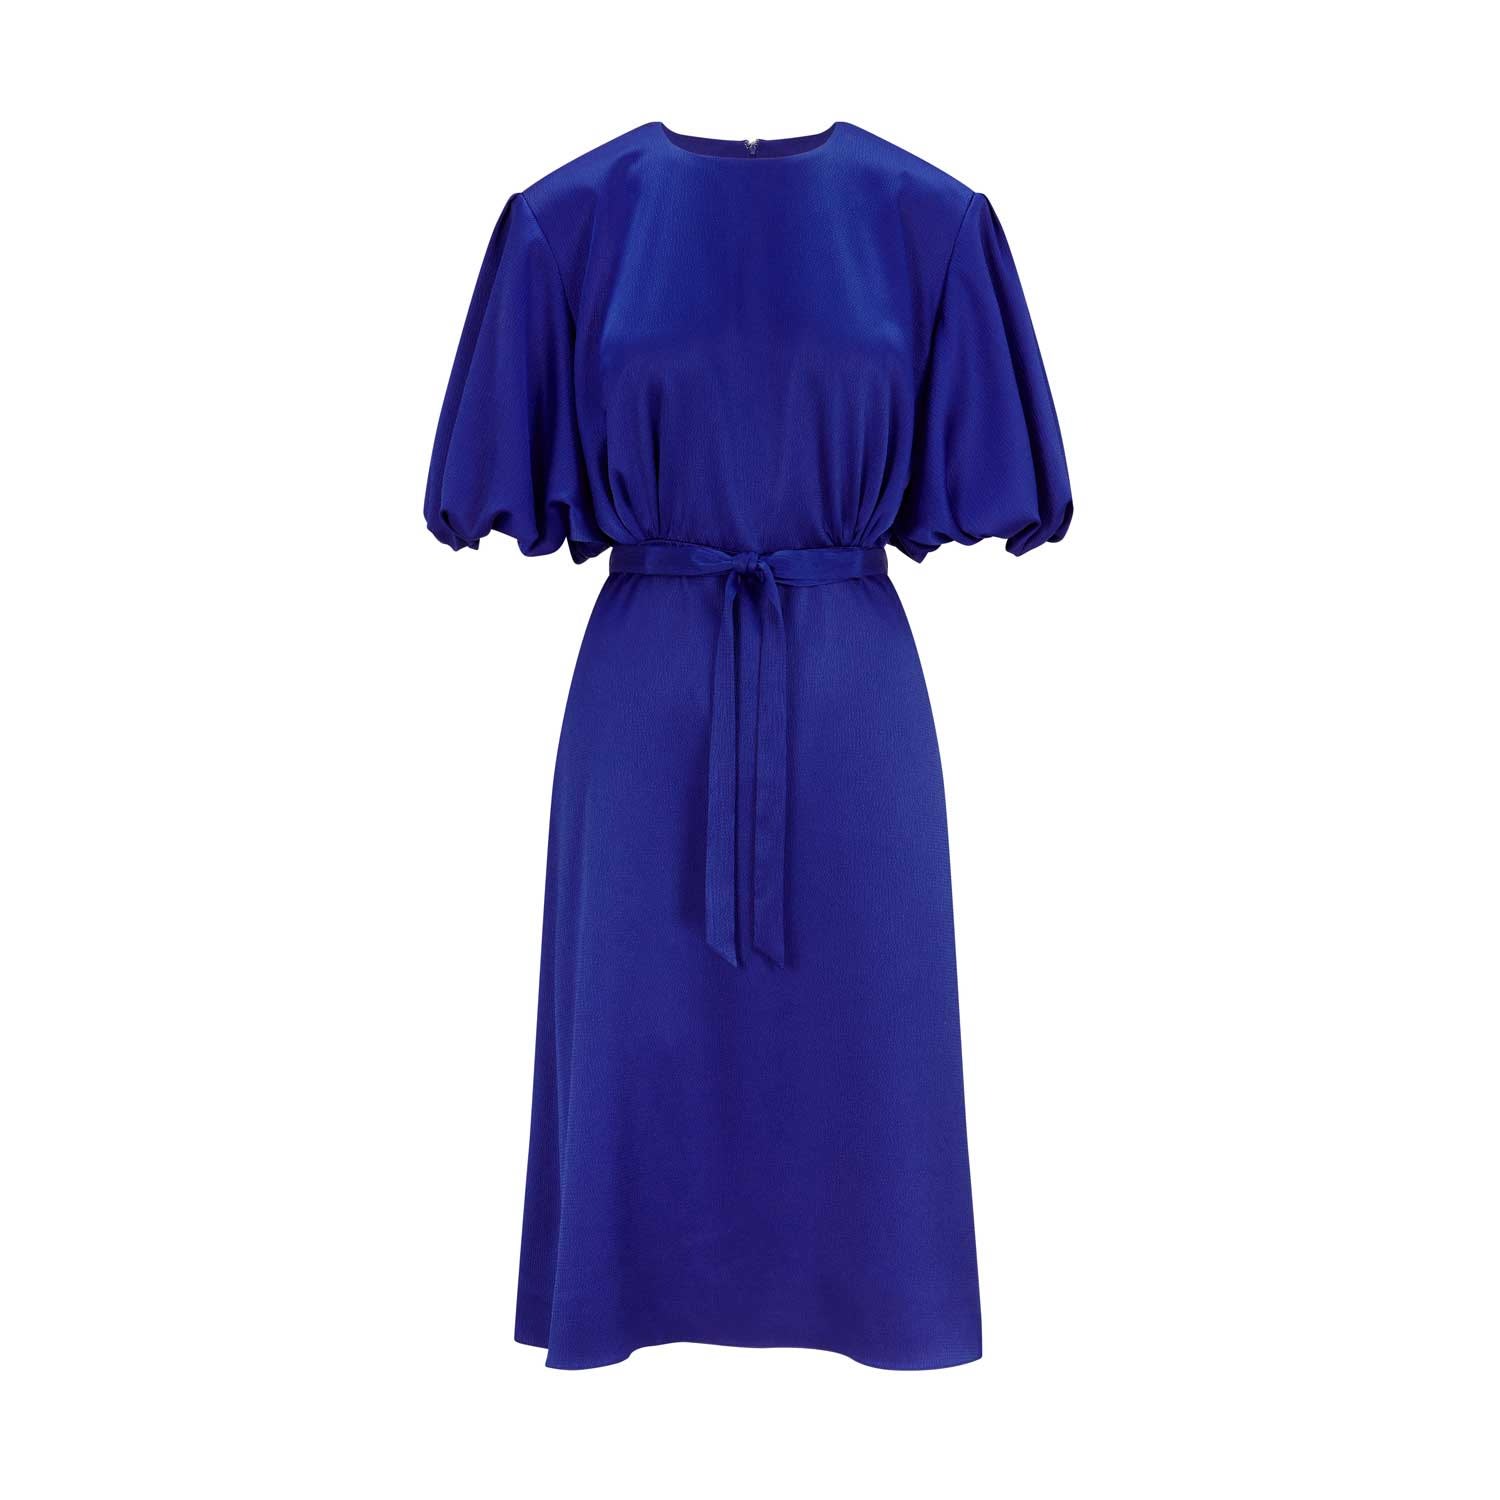 Shop Femponiq Women's Draped Puff Sleeve Satin Dress - Royal Blue